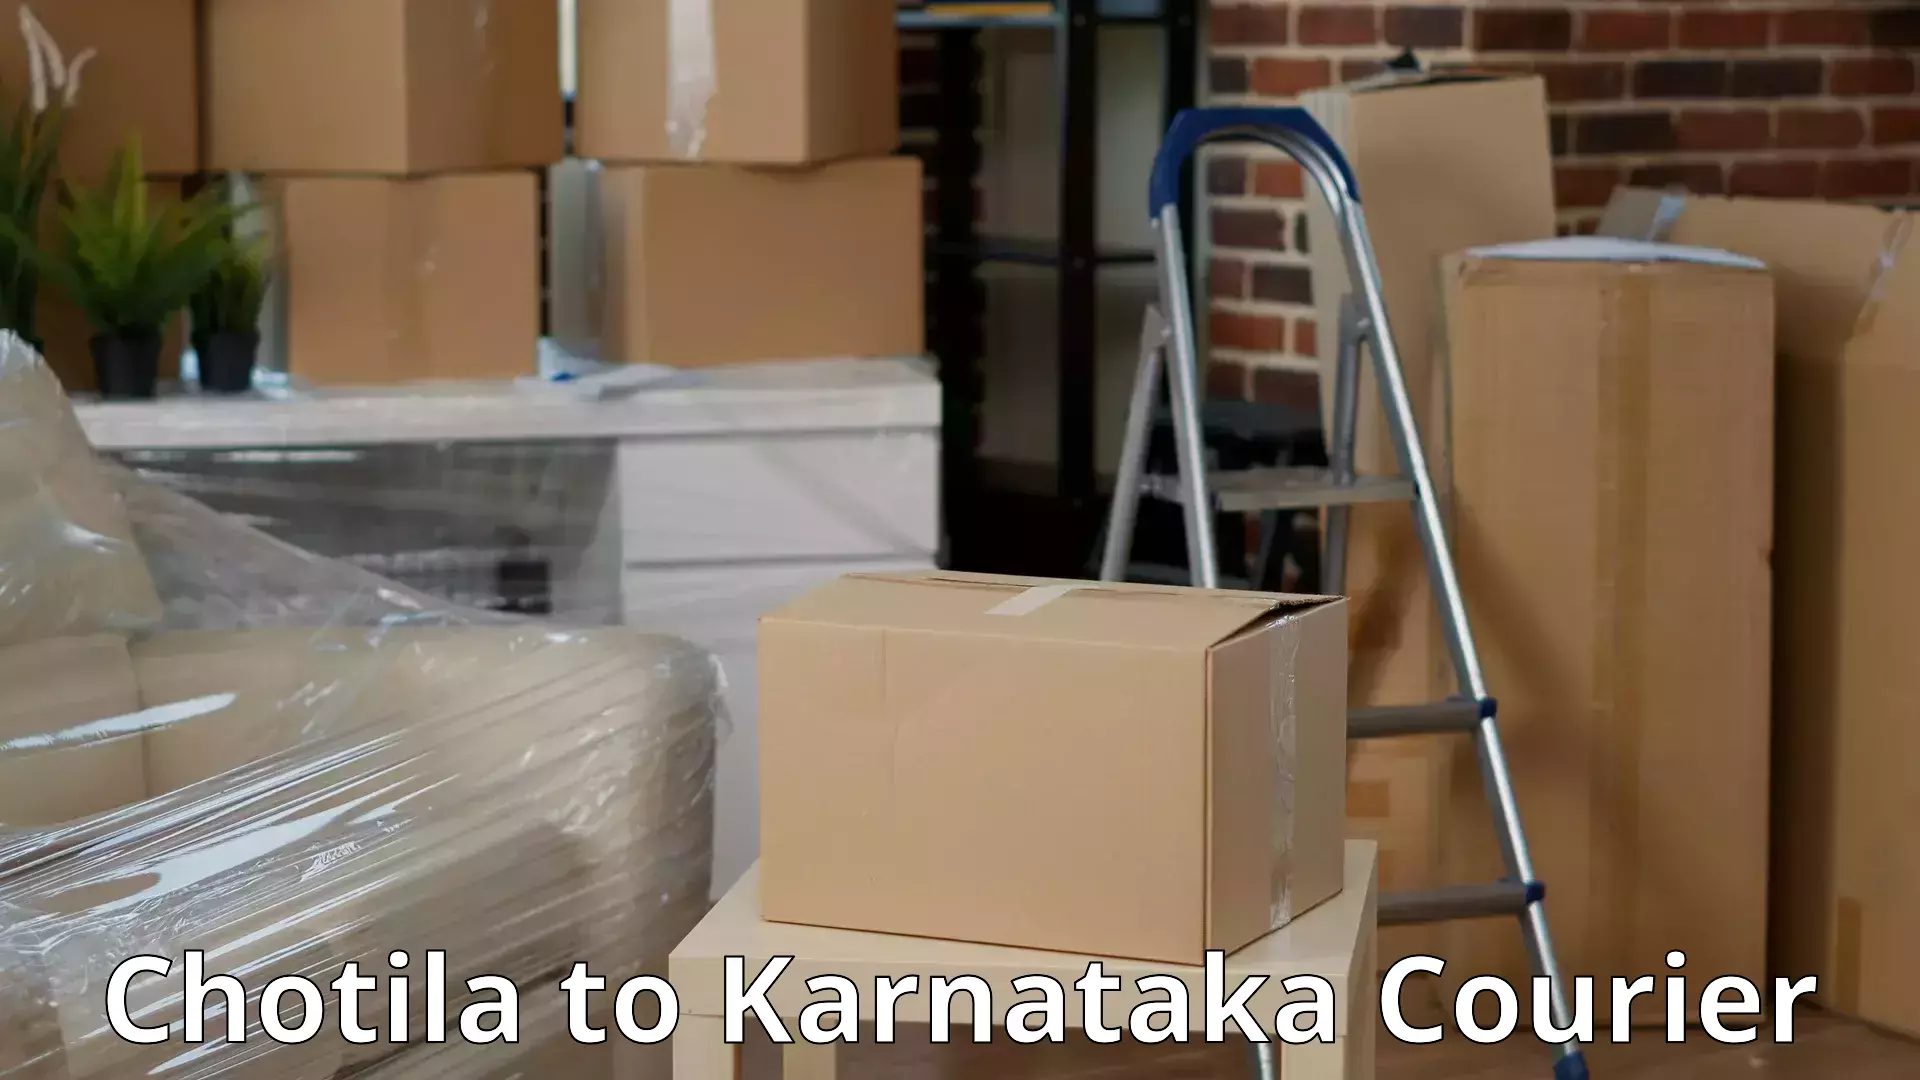 Household moving experts Chotila to Karnataka